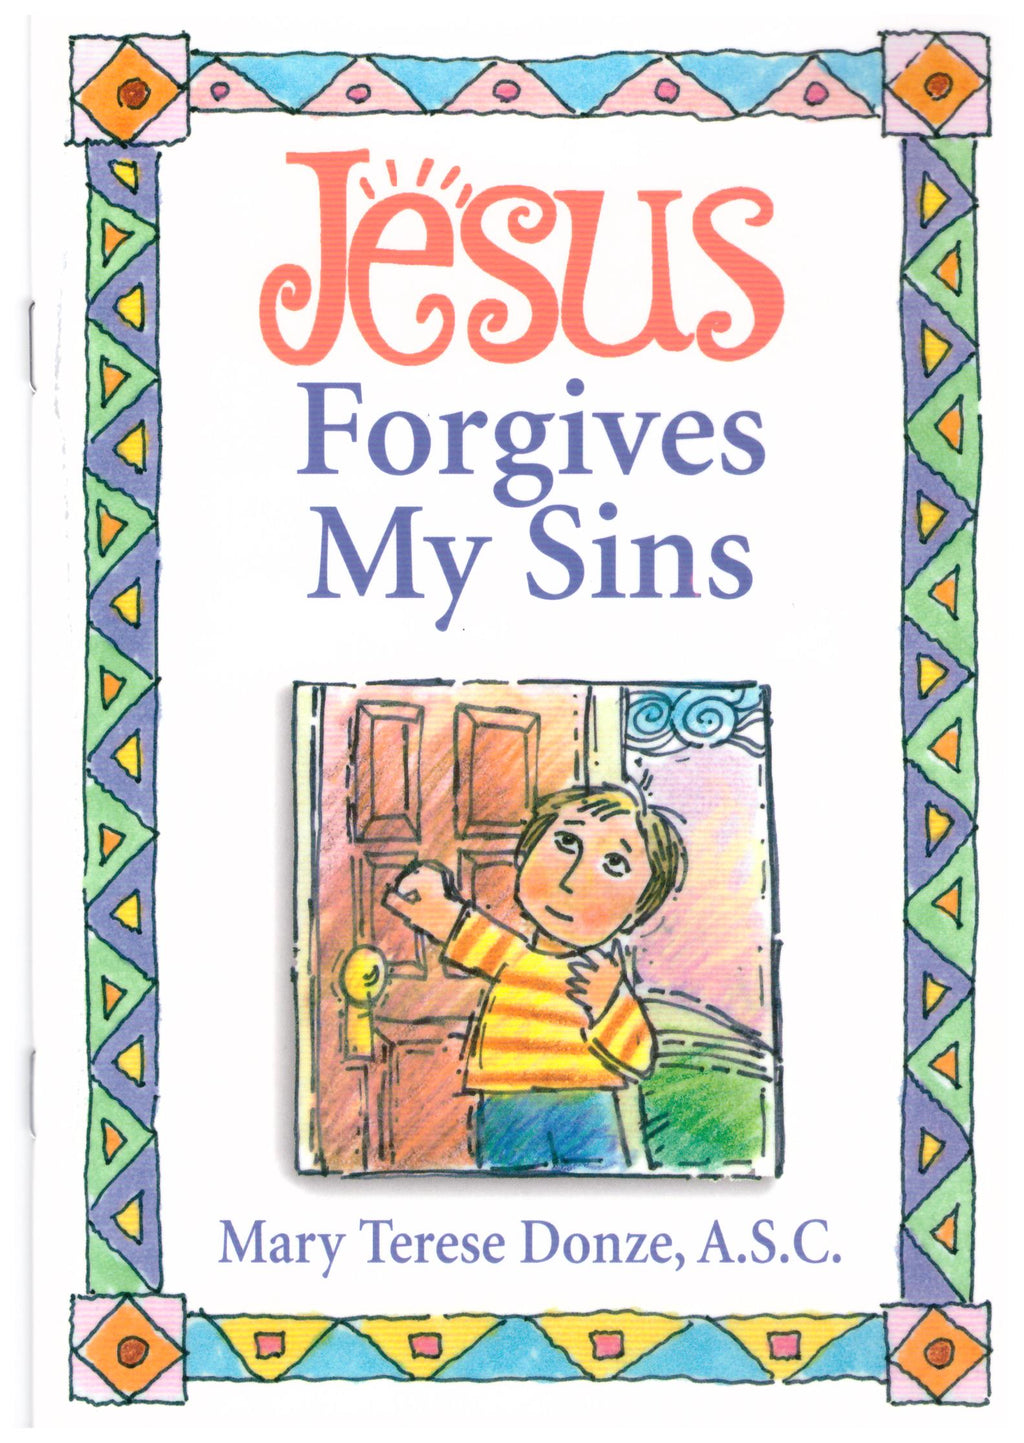 JESUS FORGIVES MY SINS